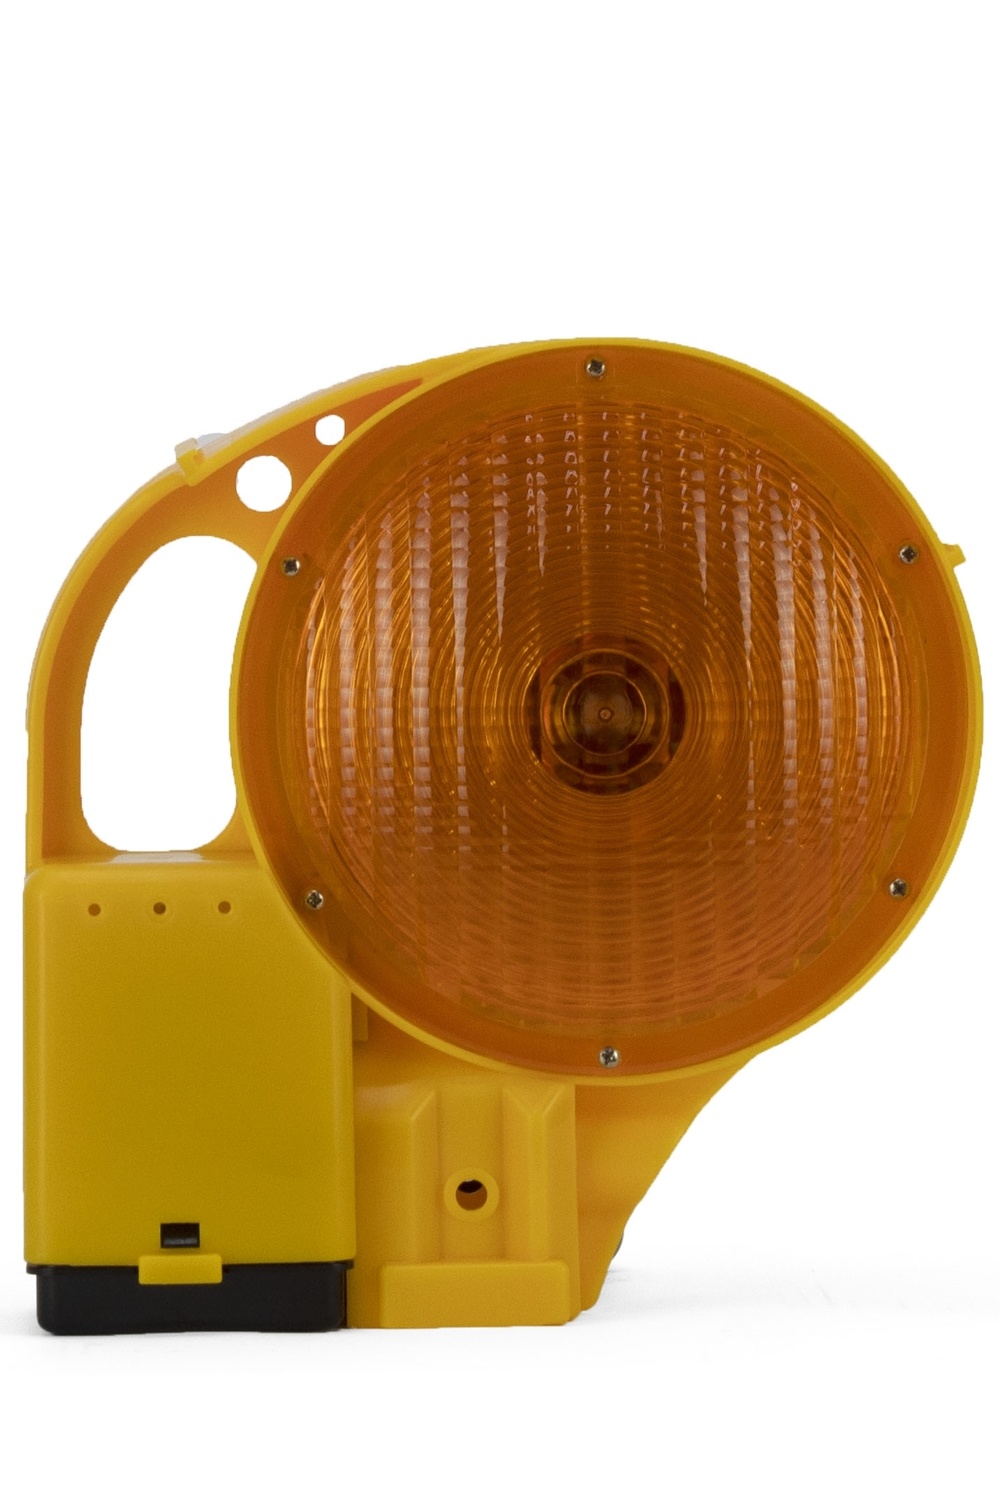 Warning lamp STAR 8000 - single sided - yellow